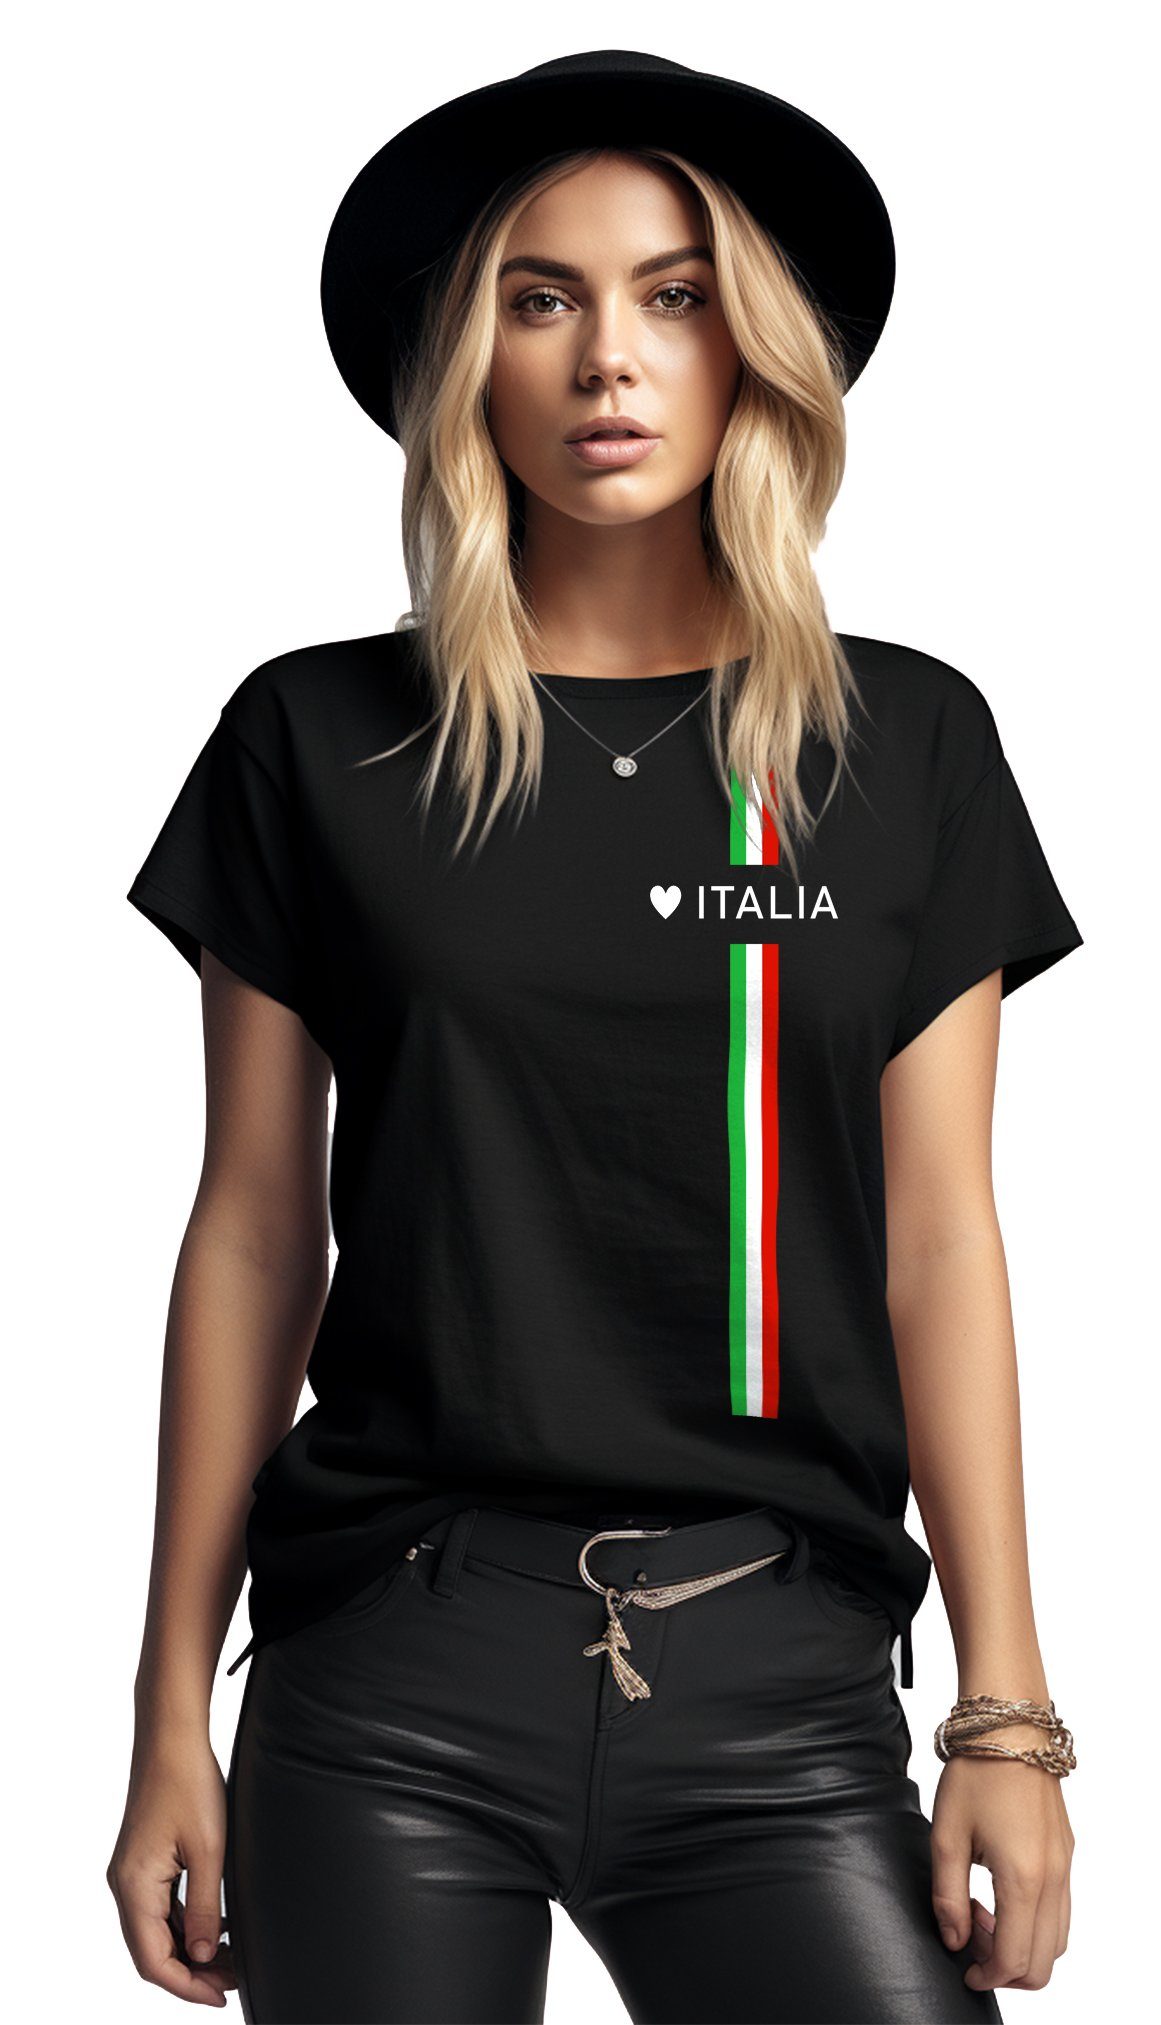 MAKAYA Print-Shirt Damen Herz Trikot Sommer Italia Mode Italien Fahne Top Kurzarmshirt, Schwarz Italienische